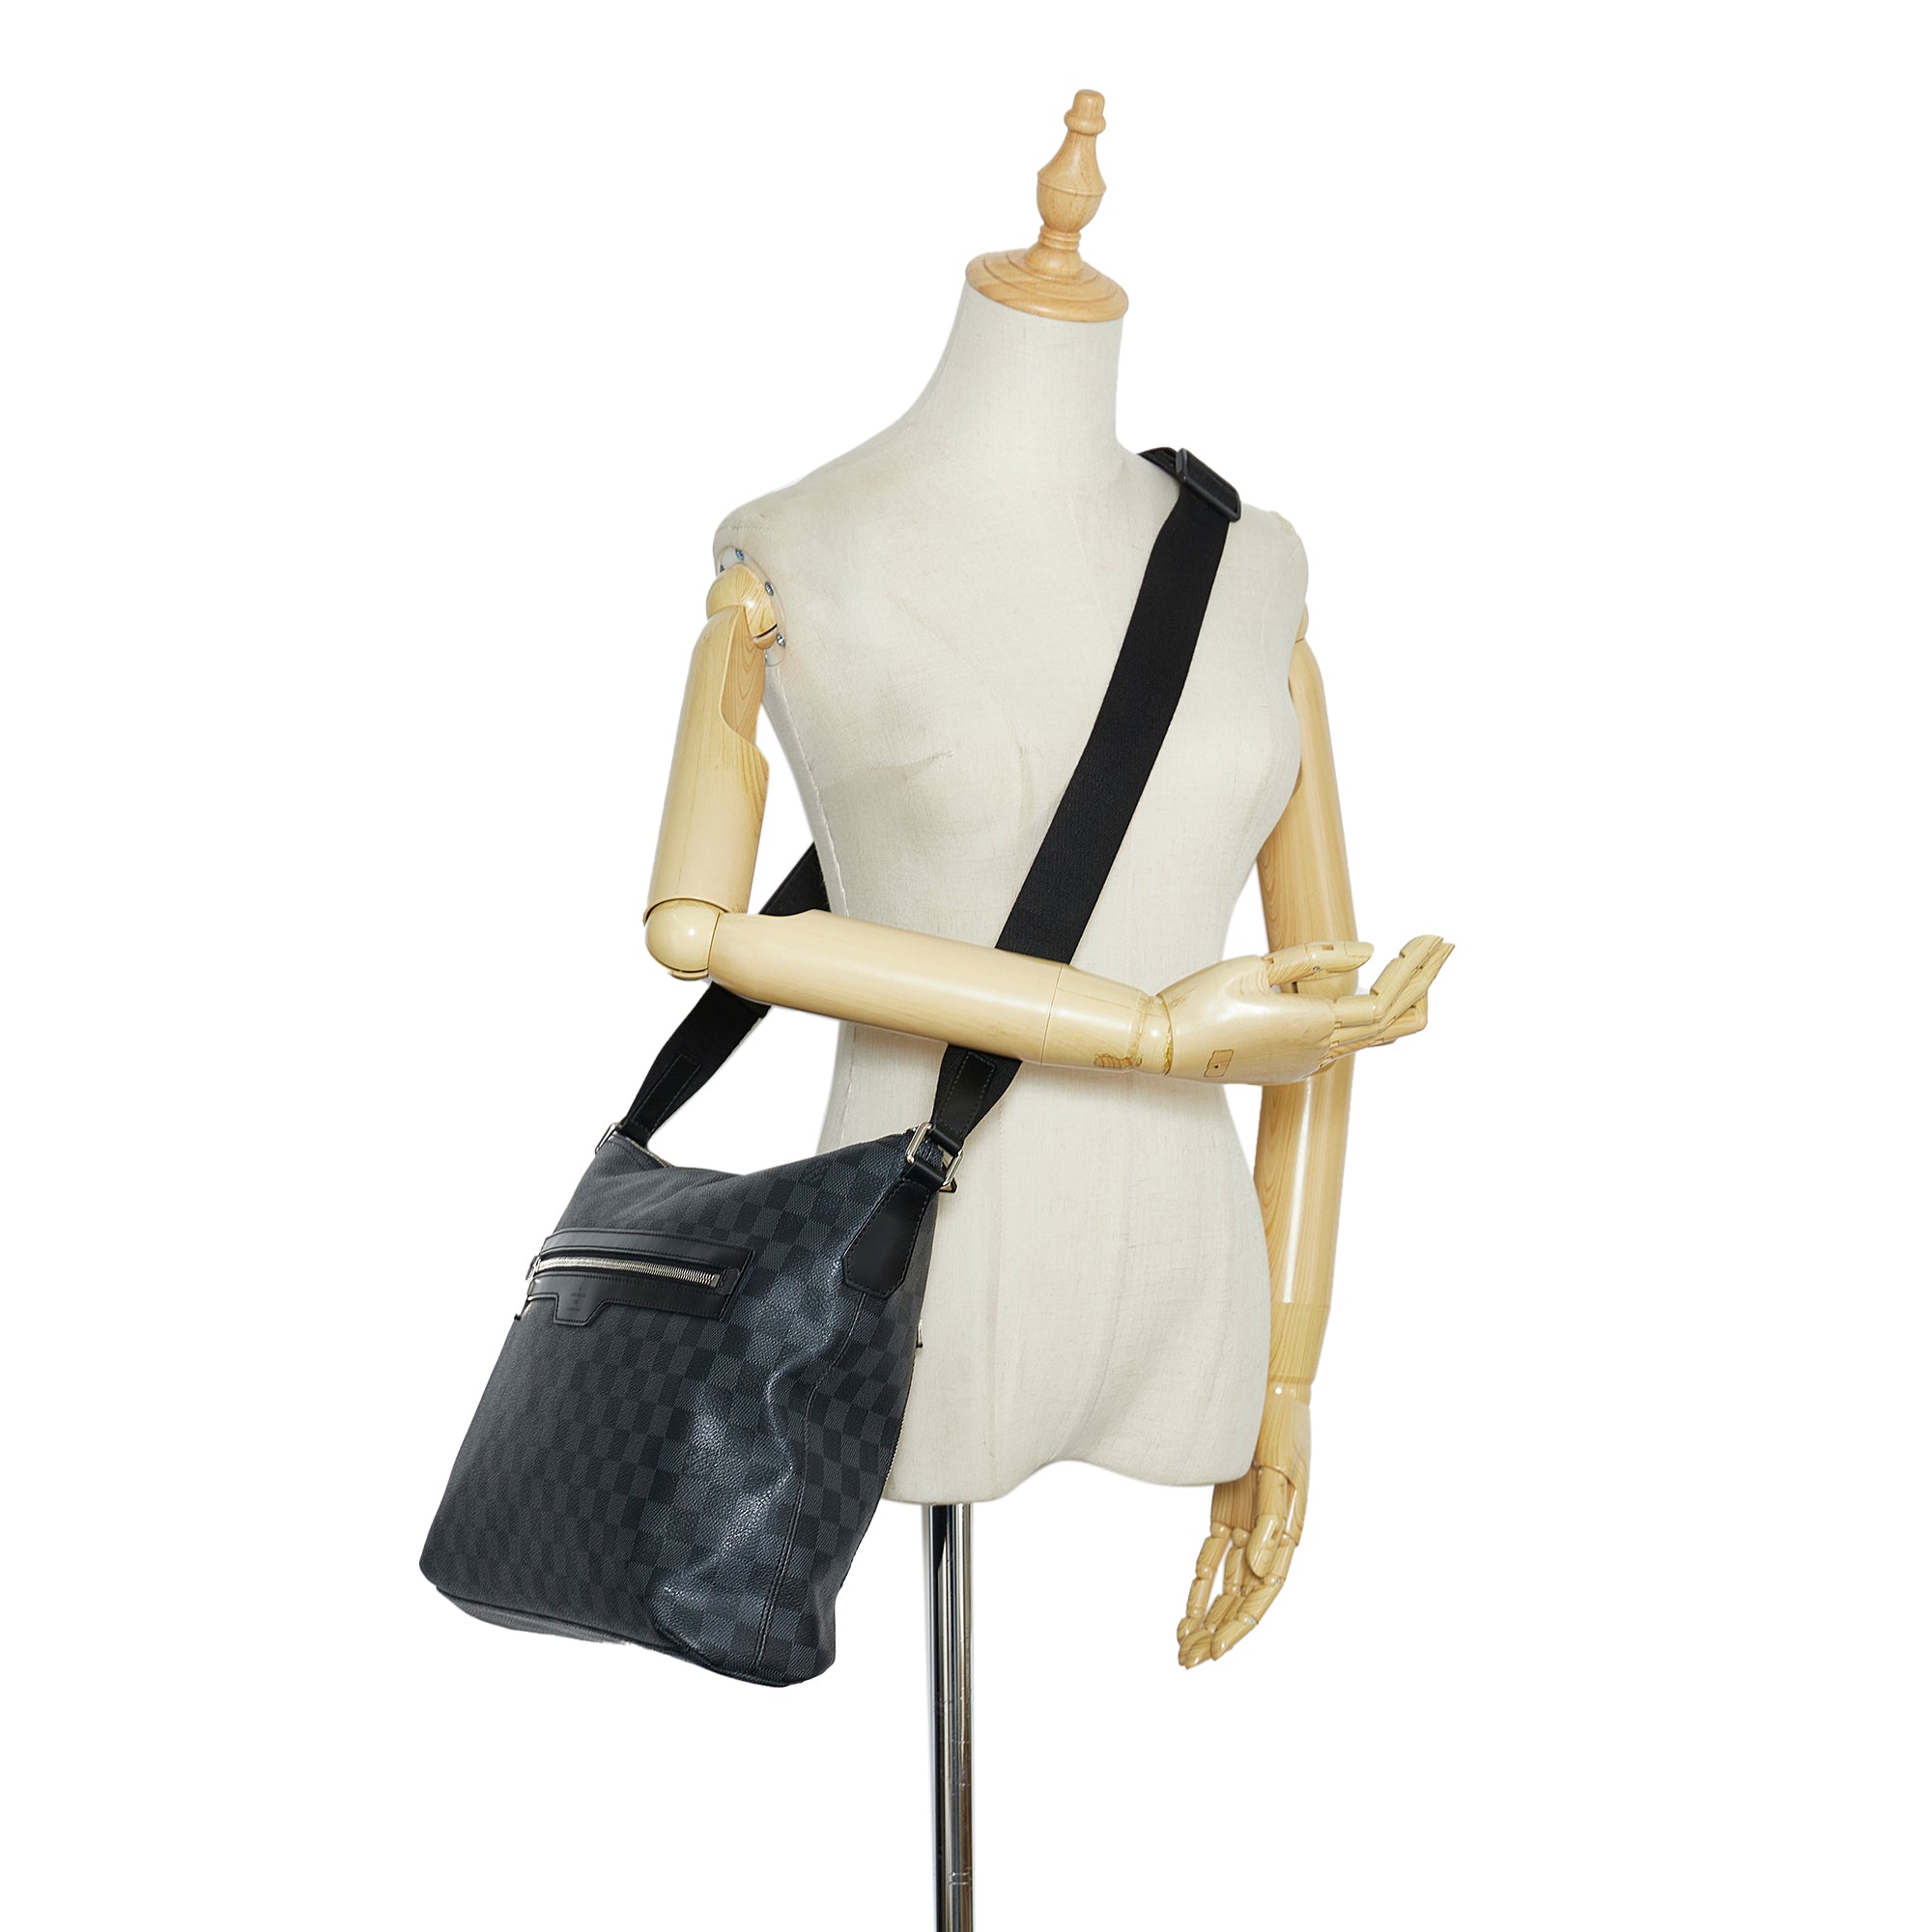 Louis Vuitton Mick MM Crossbody Messenger Bag In Damier Graphite Canvas